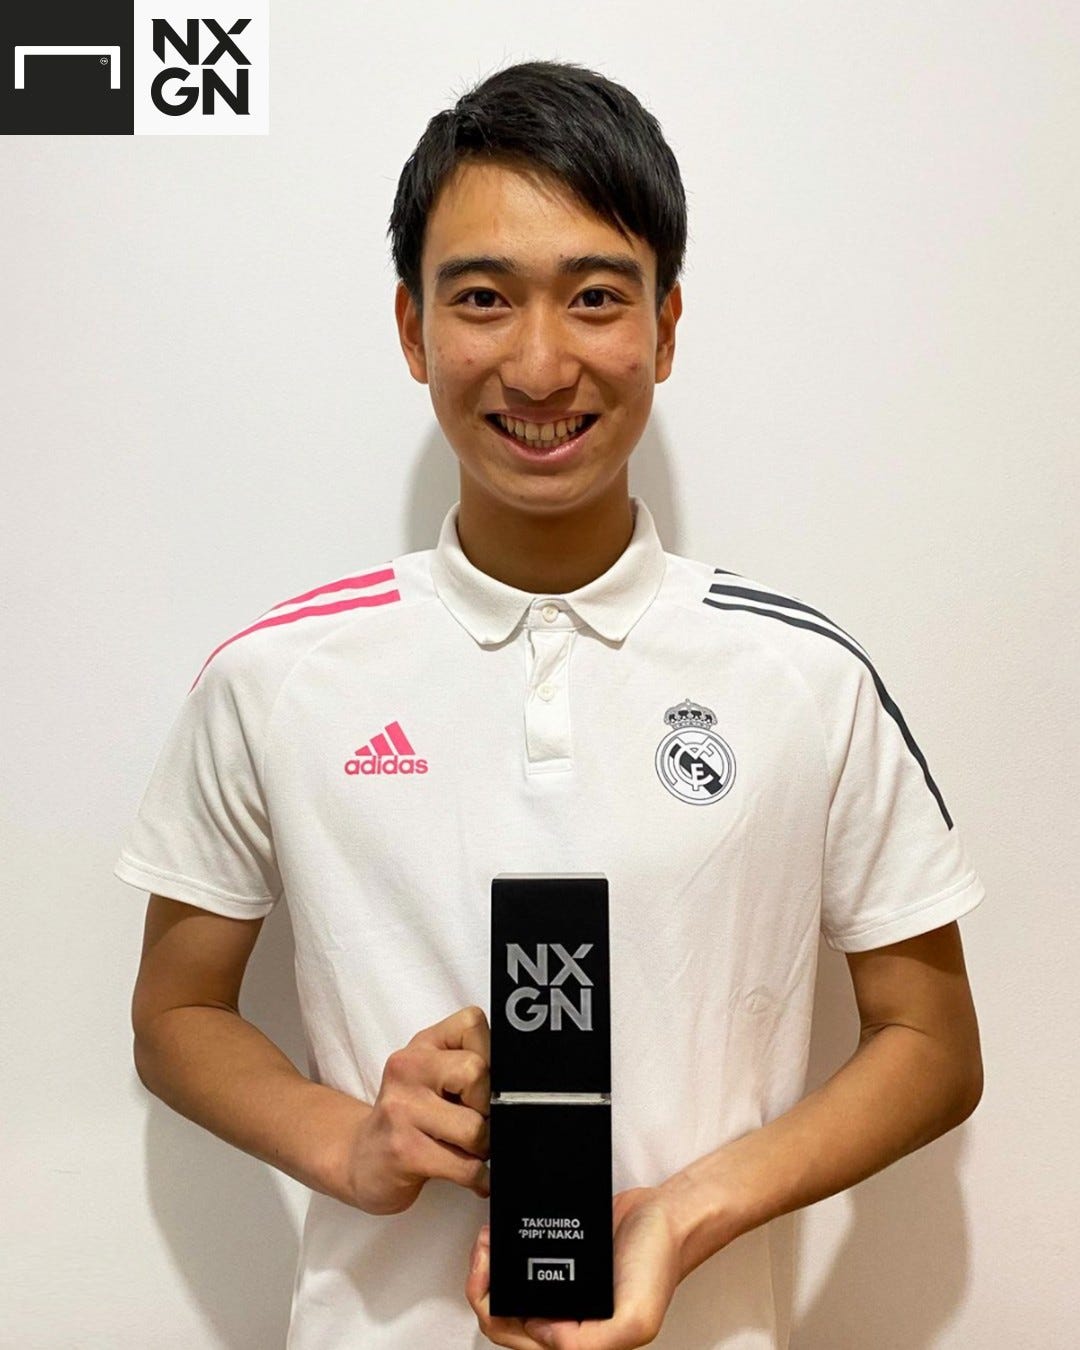 EMBED ONLY Takuhiro Nakai NXGN award GFX